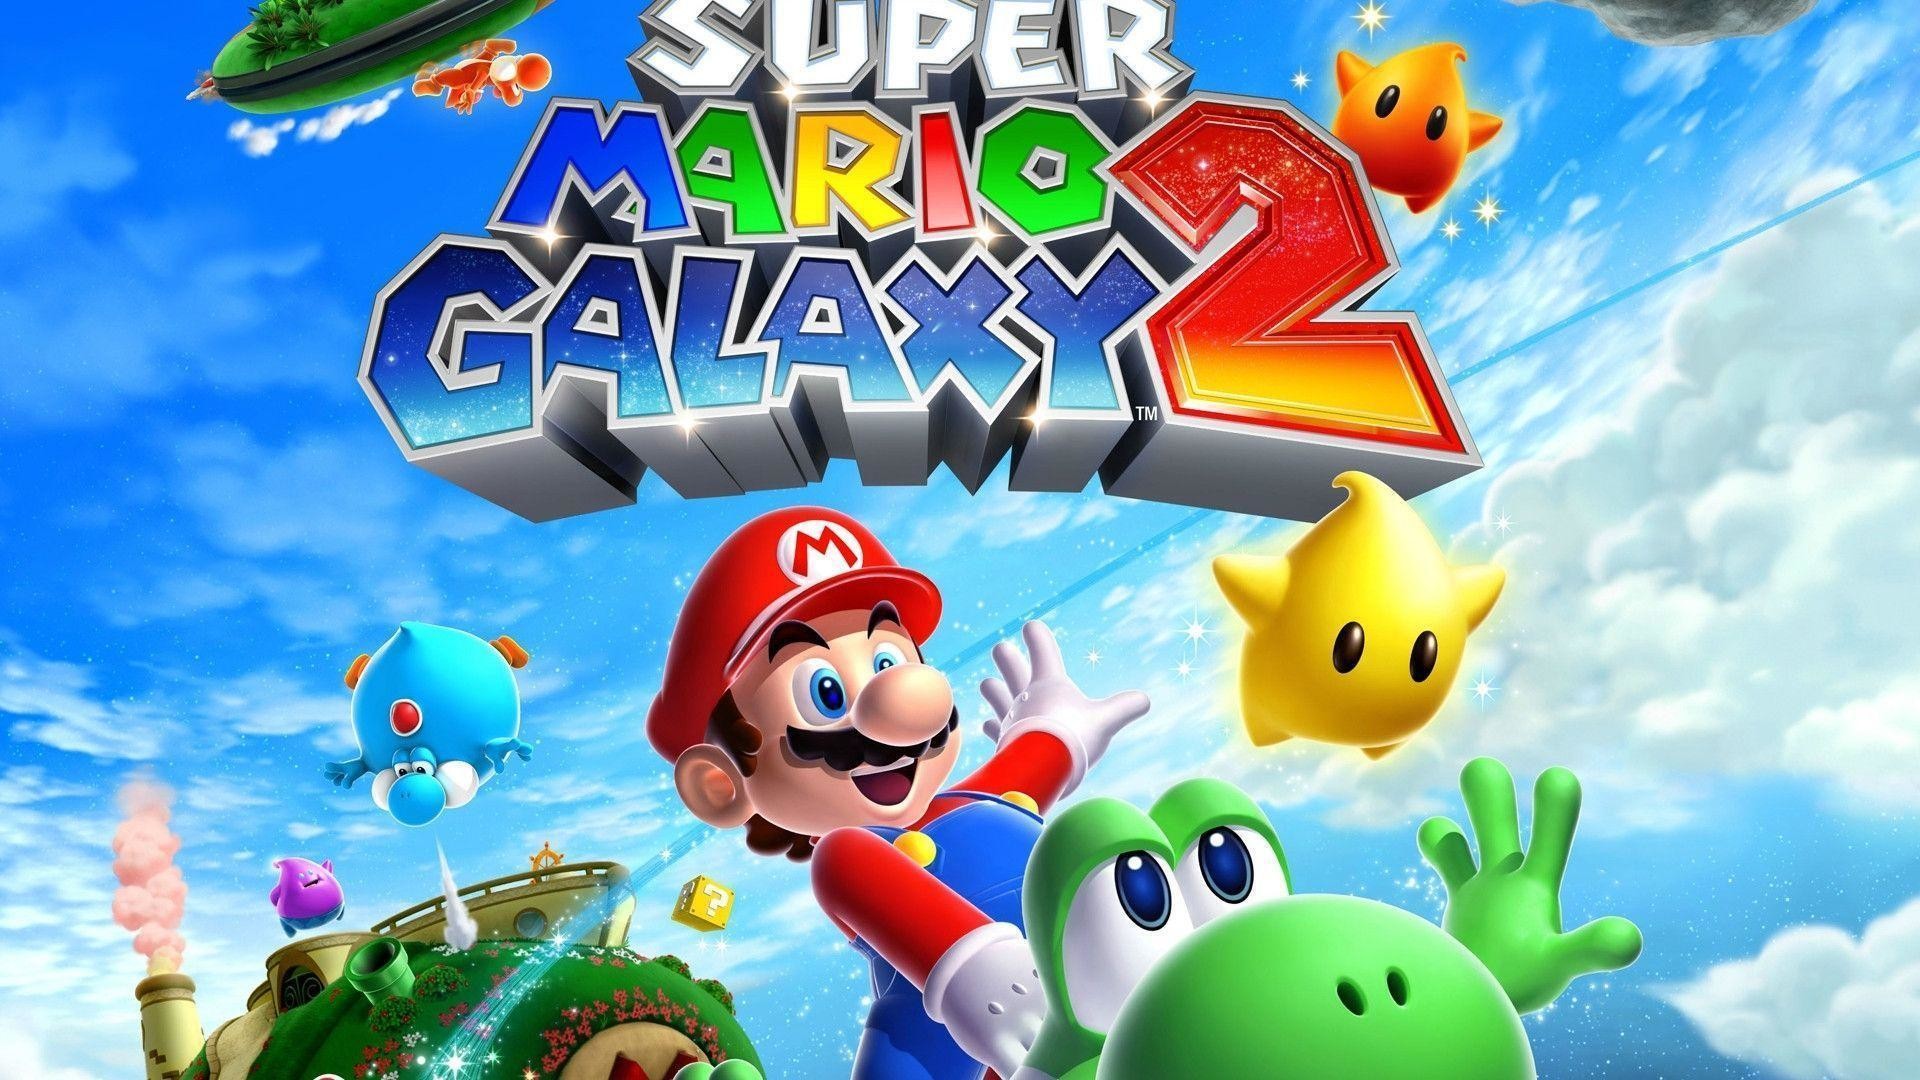 Super Mario Galaxy Wallpaper HD Download